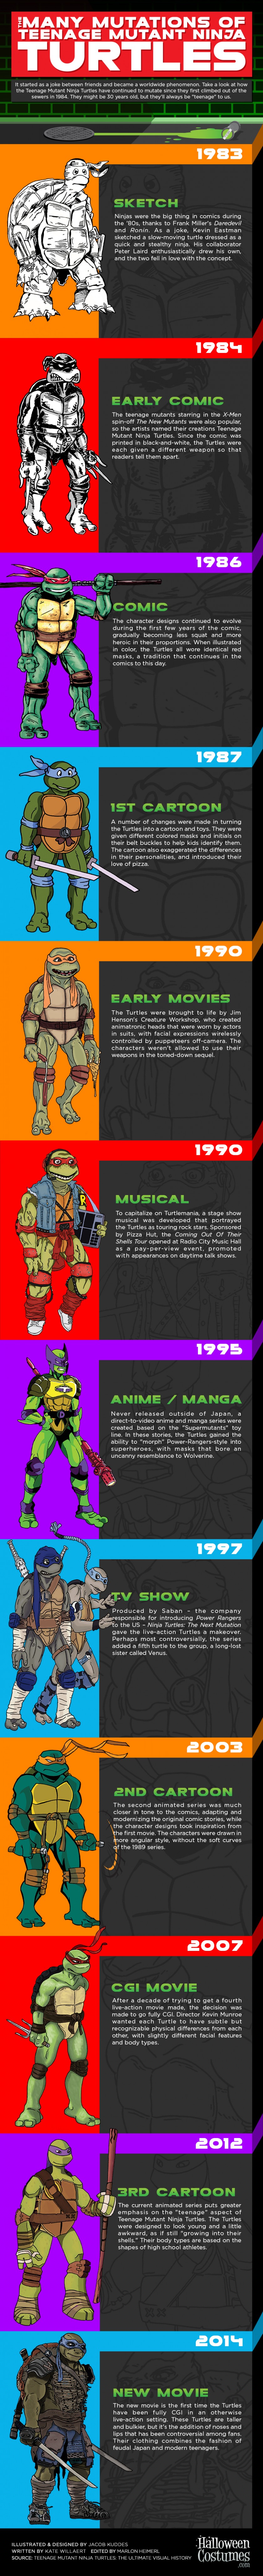 TMNT Tortues Ninja 1983 2014 Infographic